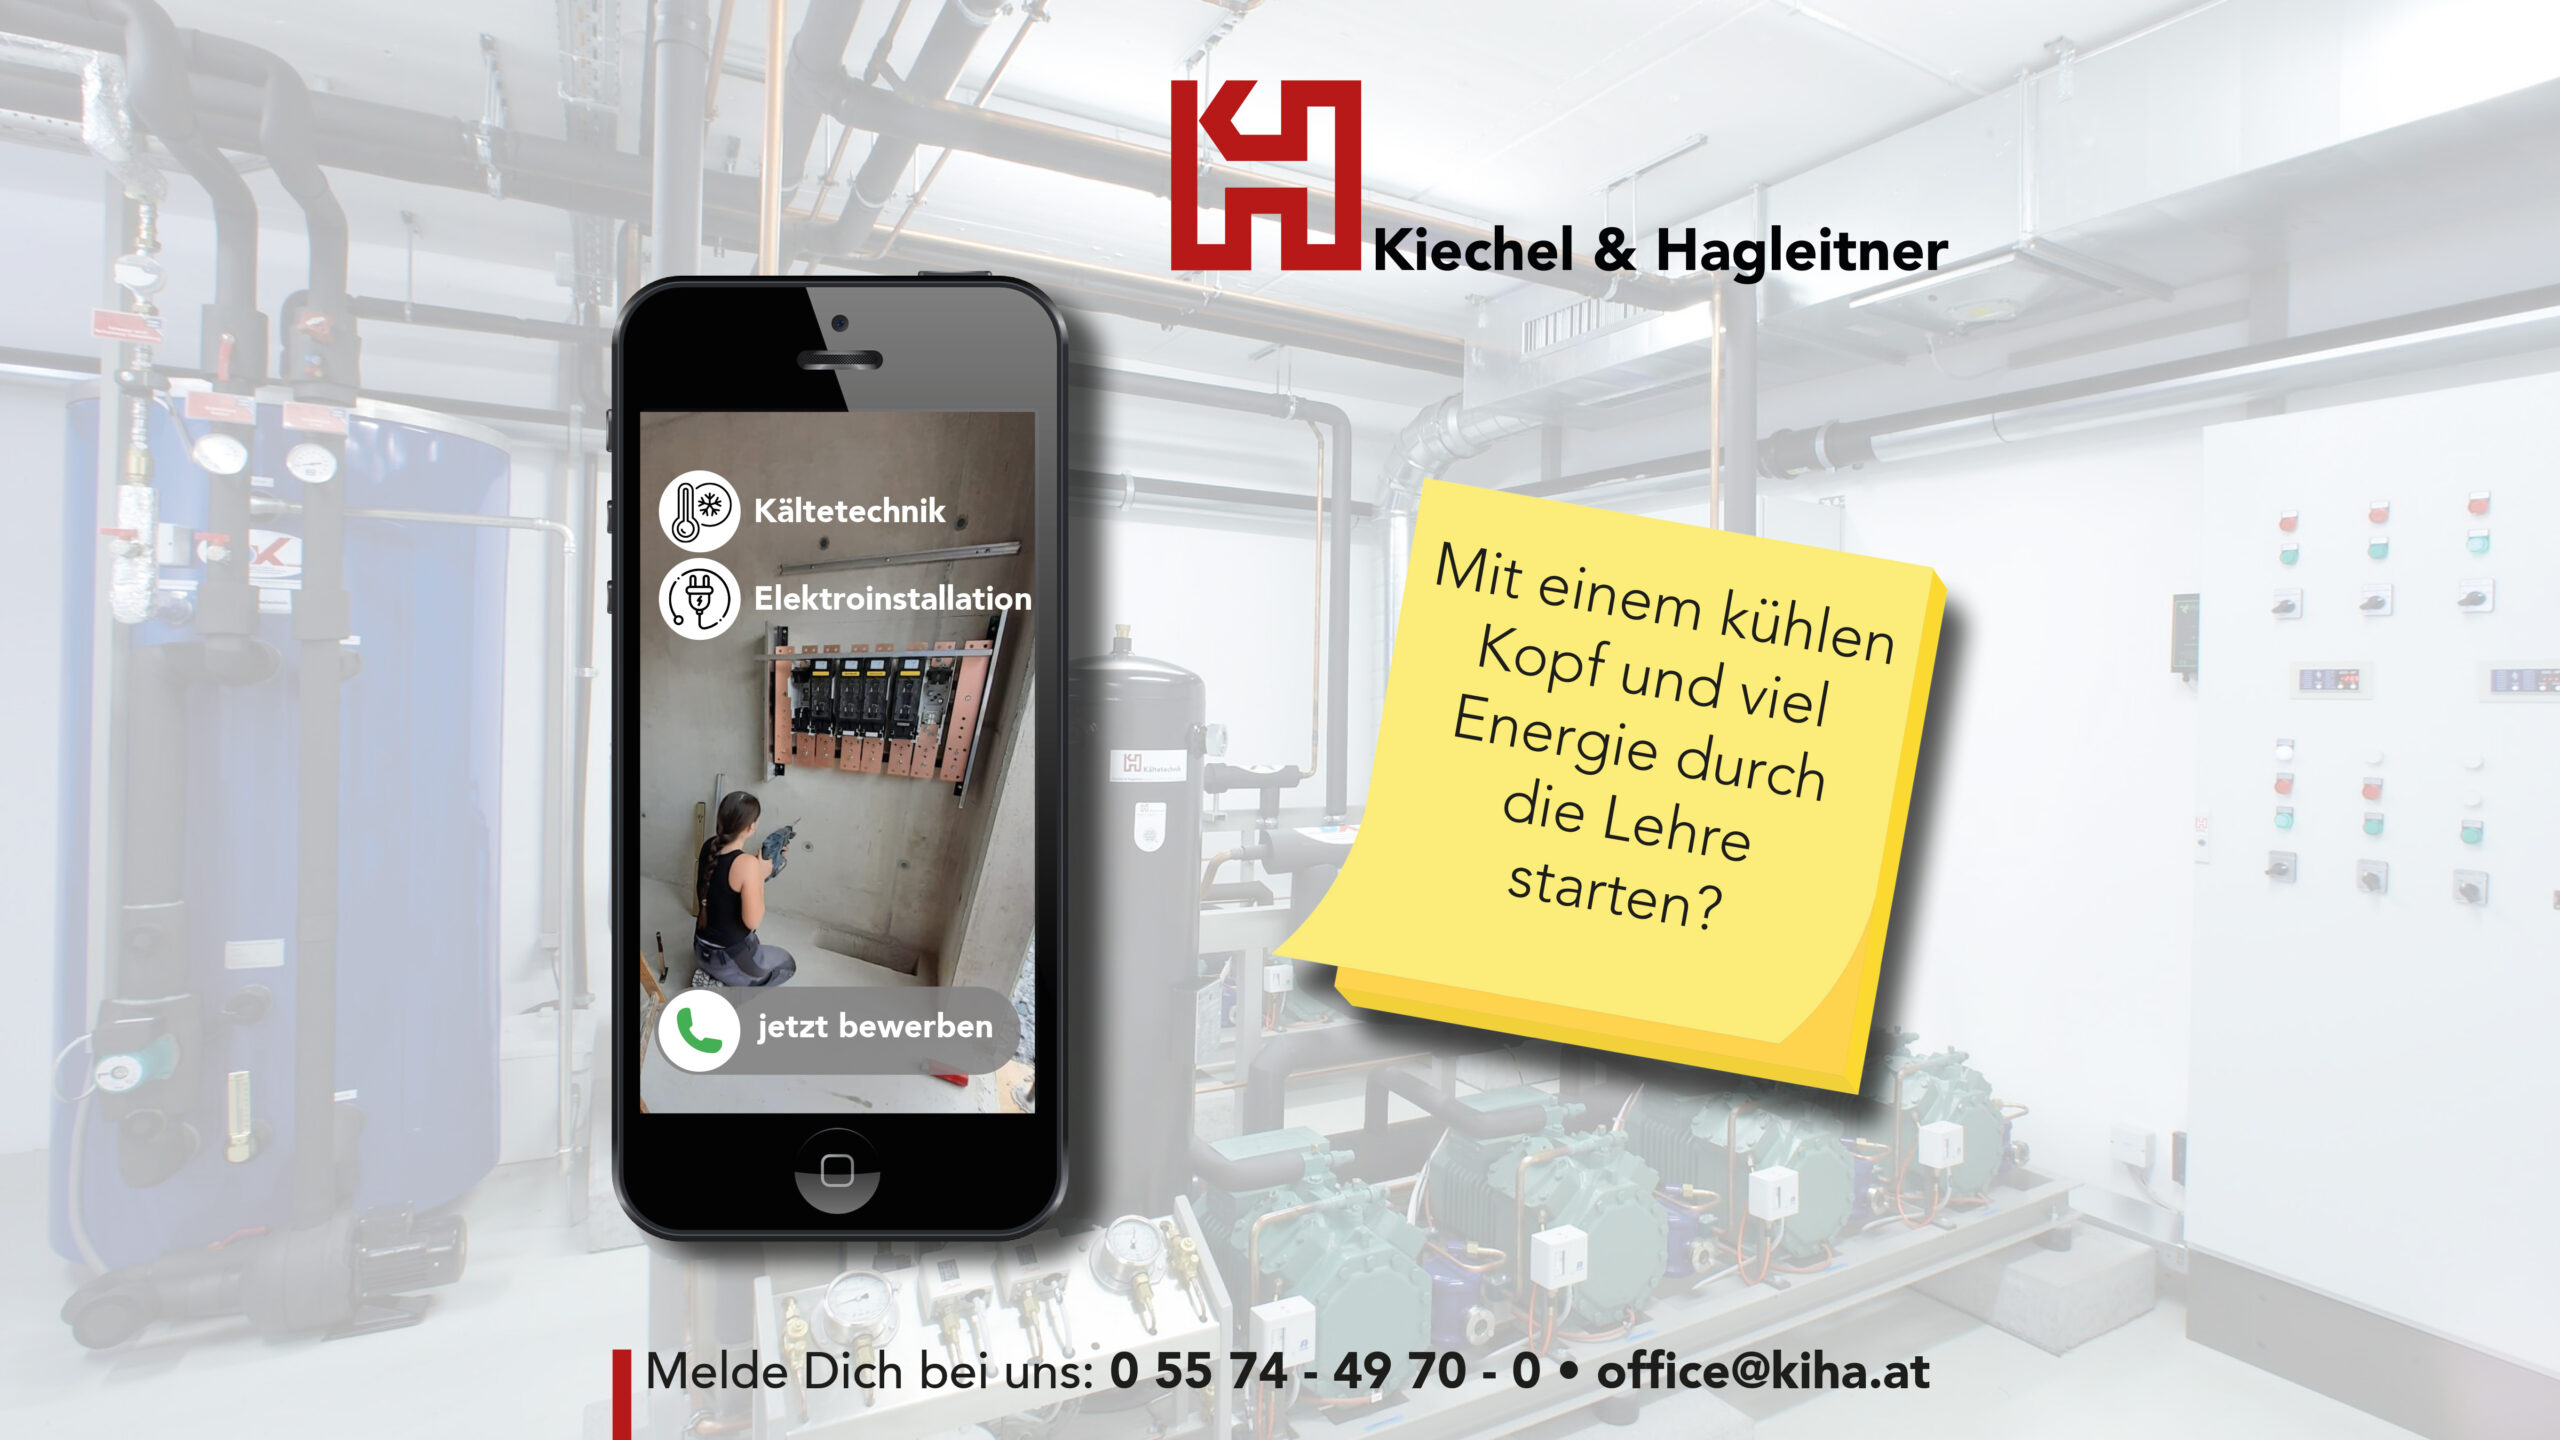 lehre24.at - Kiechel & Hagleitner GmbH